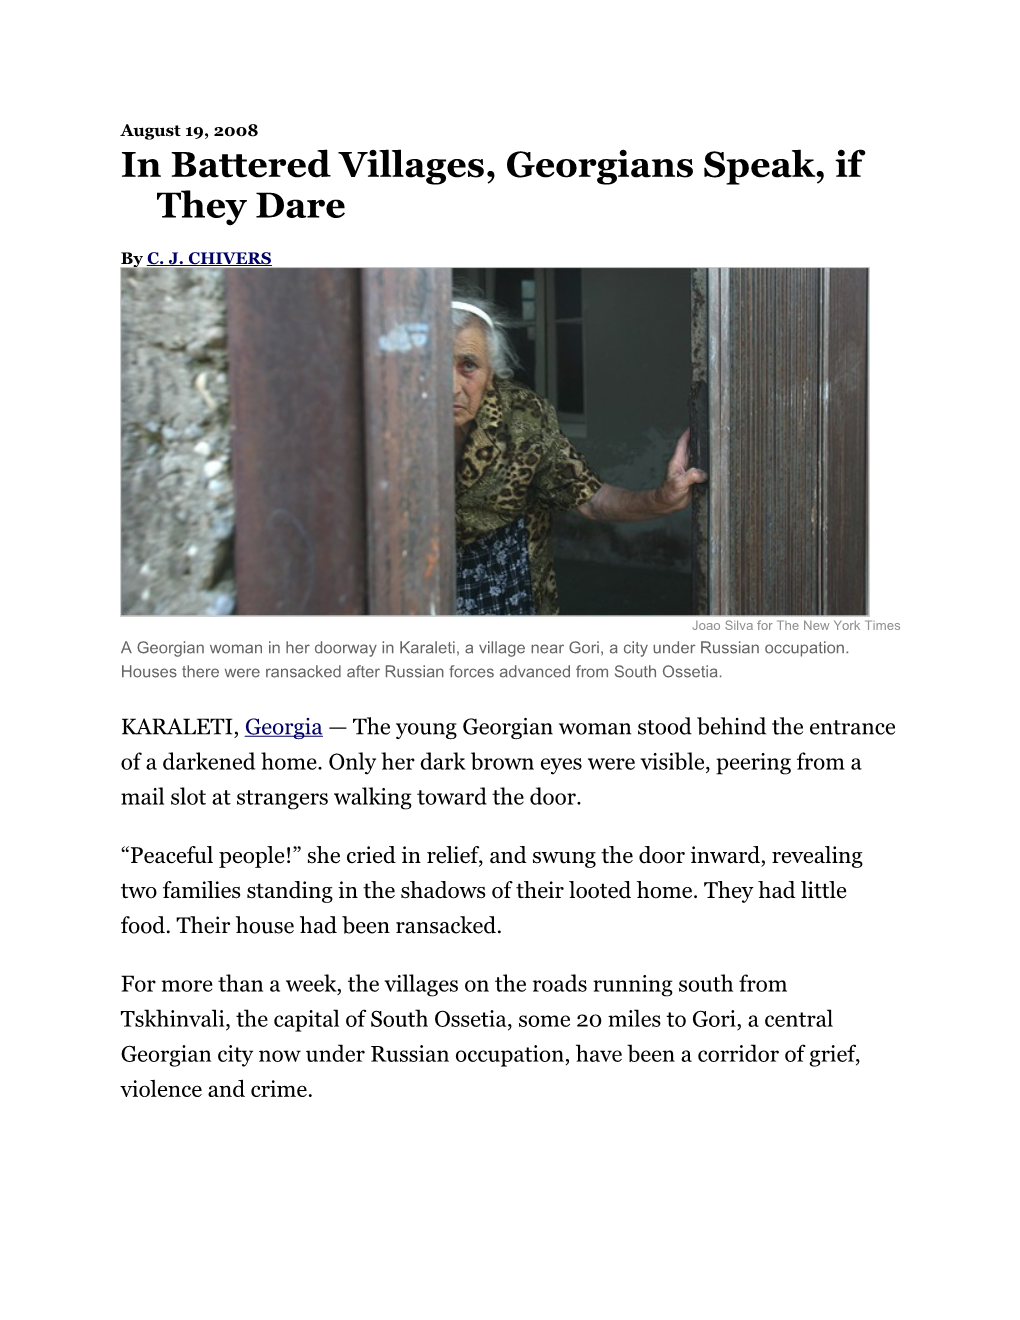 In Battered Villages, Georgians Speak, If They Dare